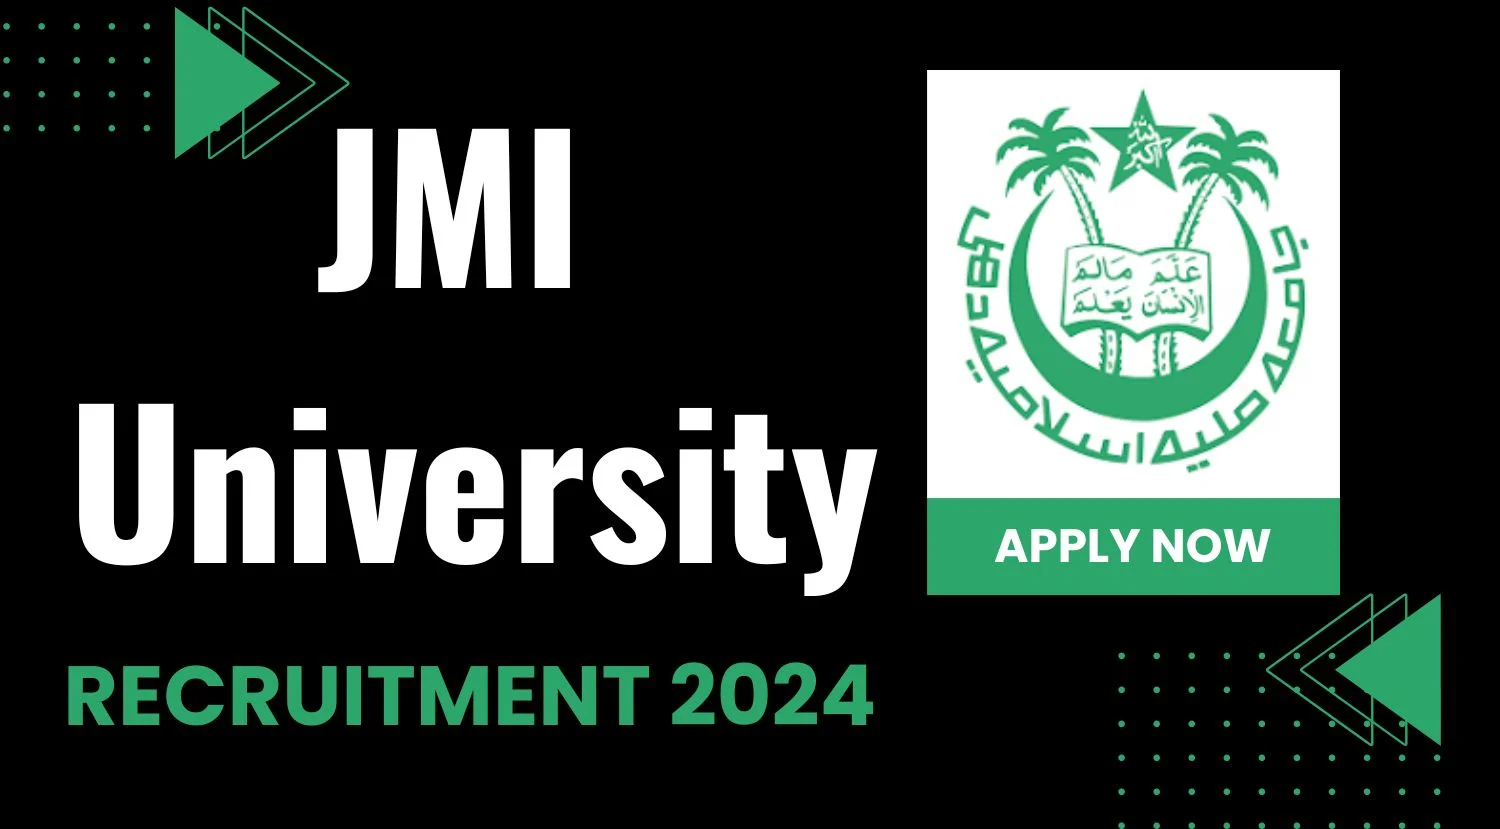 JMI University Recruitment 2024 Notification Eligibility Criteria How to Apply